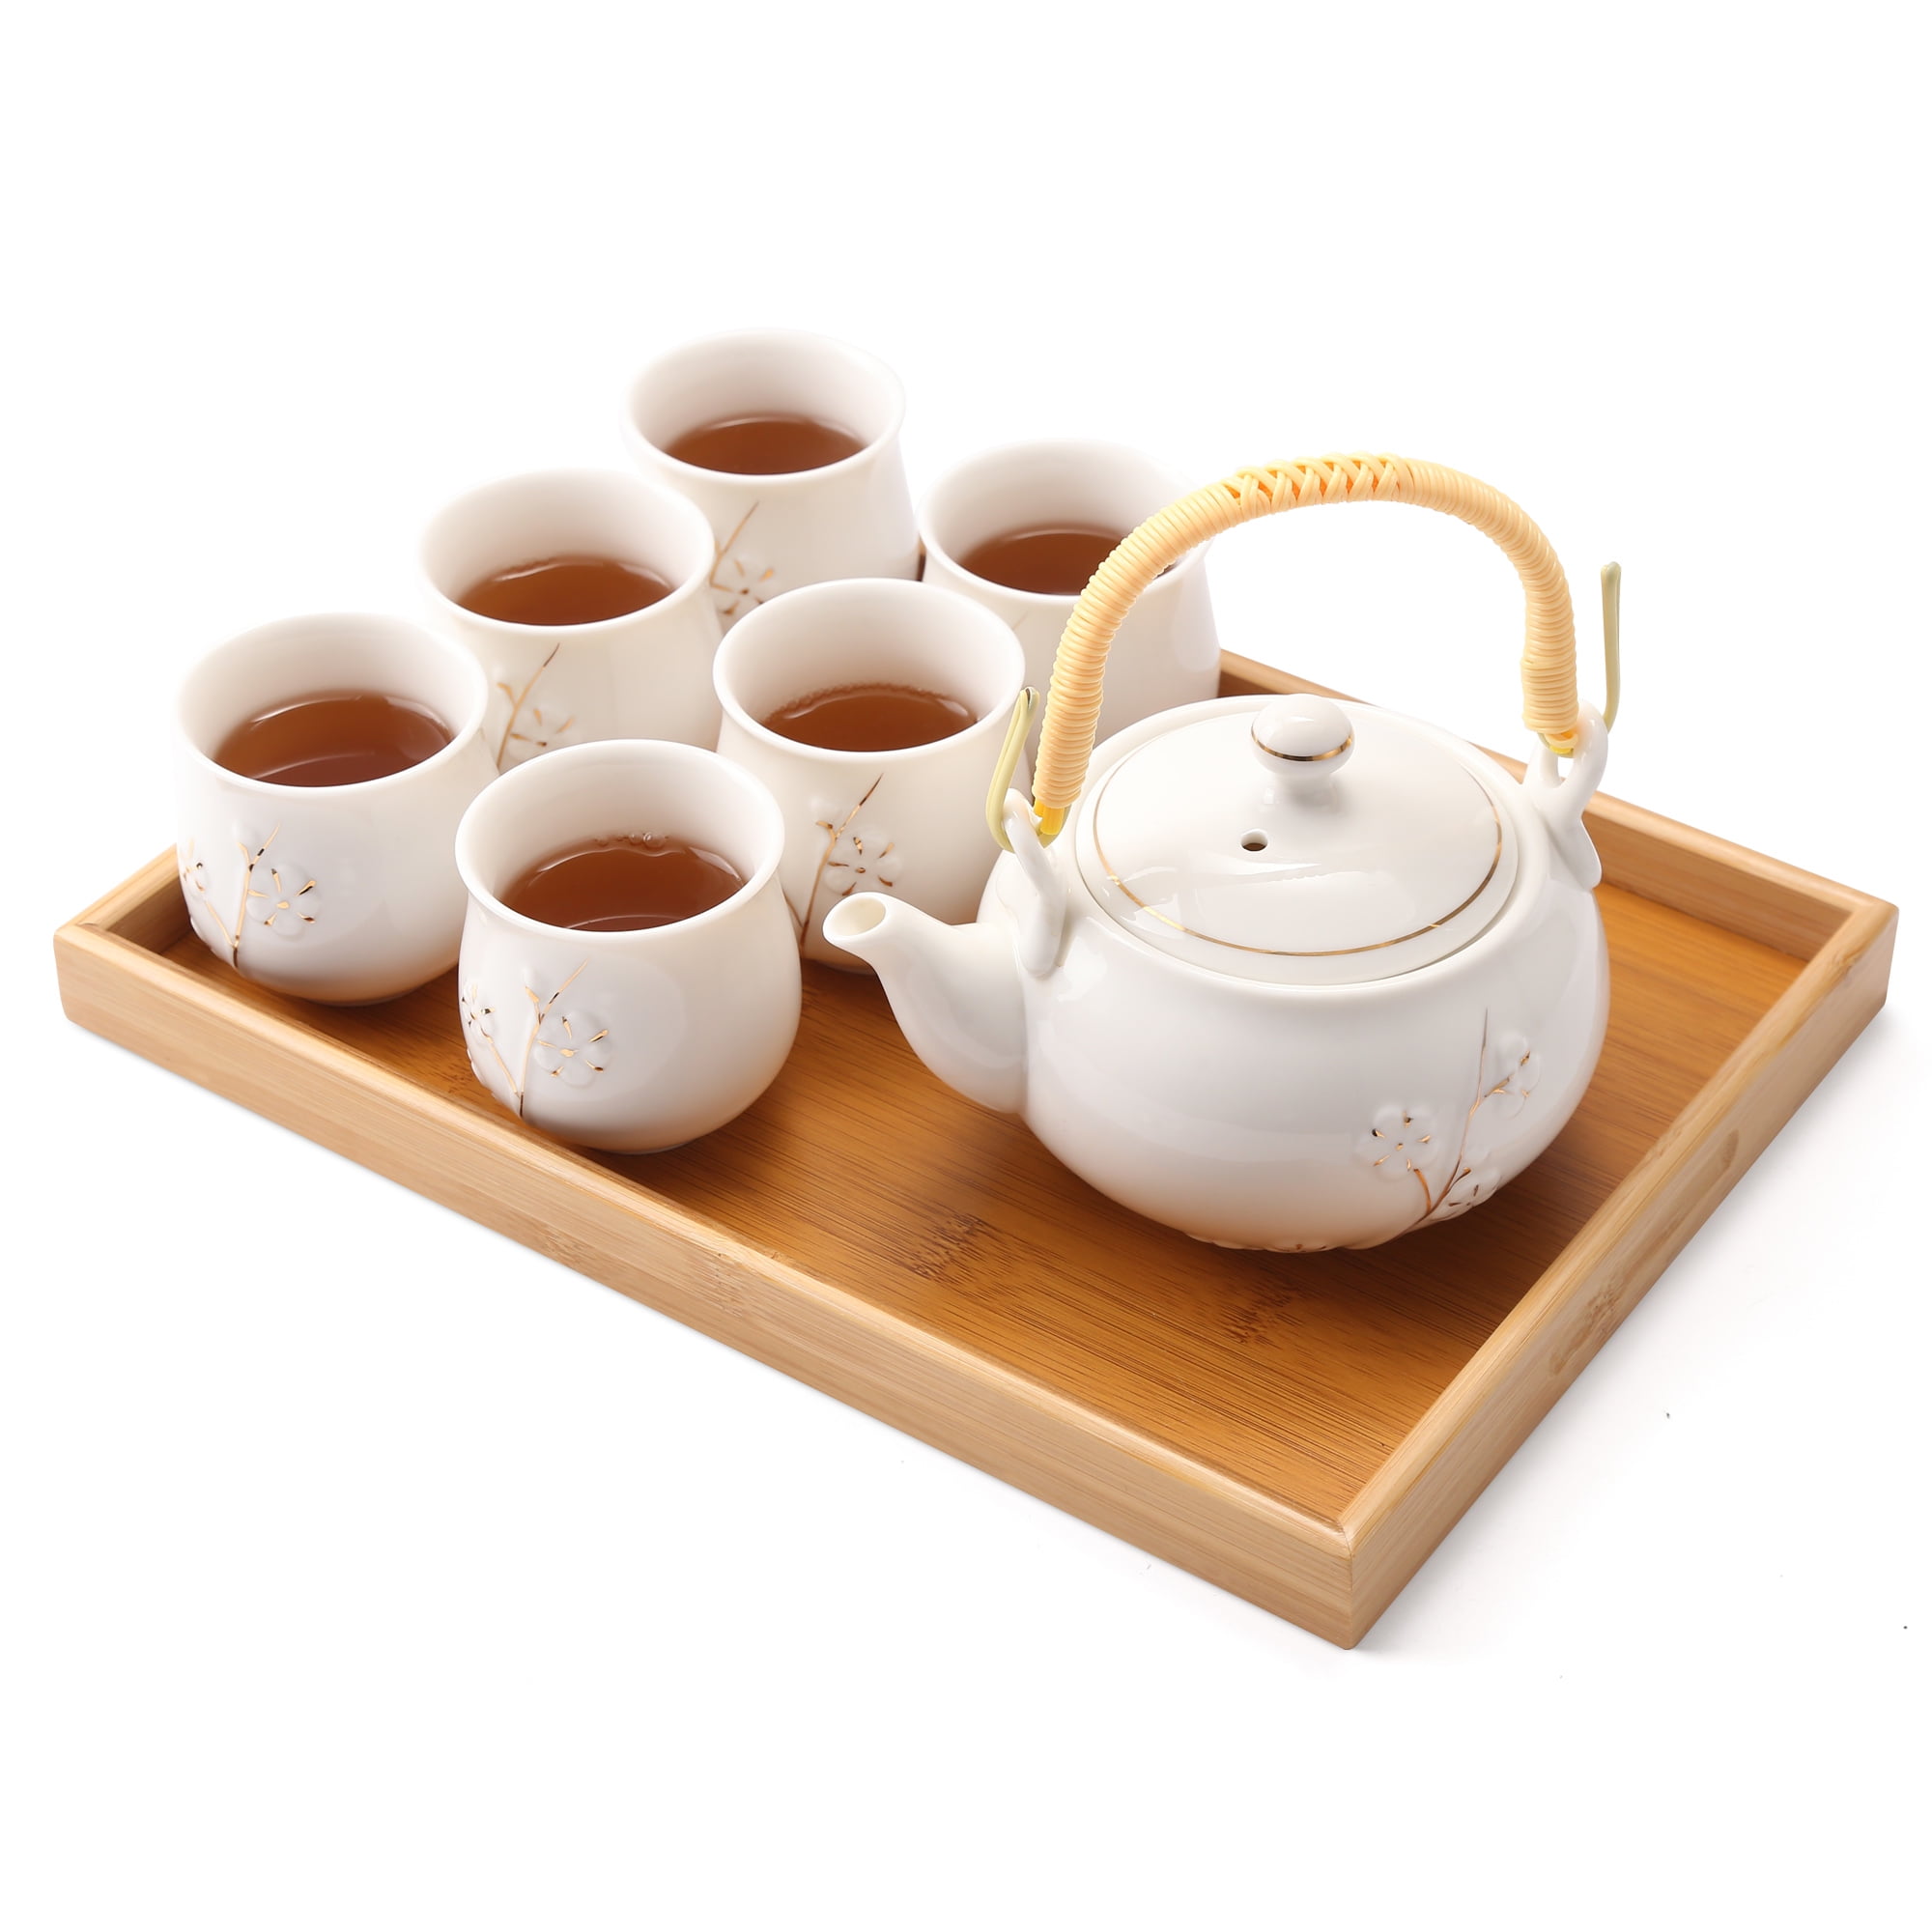 DUJUST 21 pcs Small Tea Set of 6, Gray Marble Texture with Handcraft Golden  Trim, Fine Porcelain Tea pot Set for Kids&Adults, 1 Glass Teapot(22oz), 6